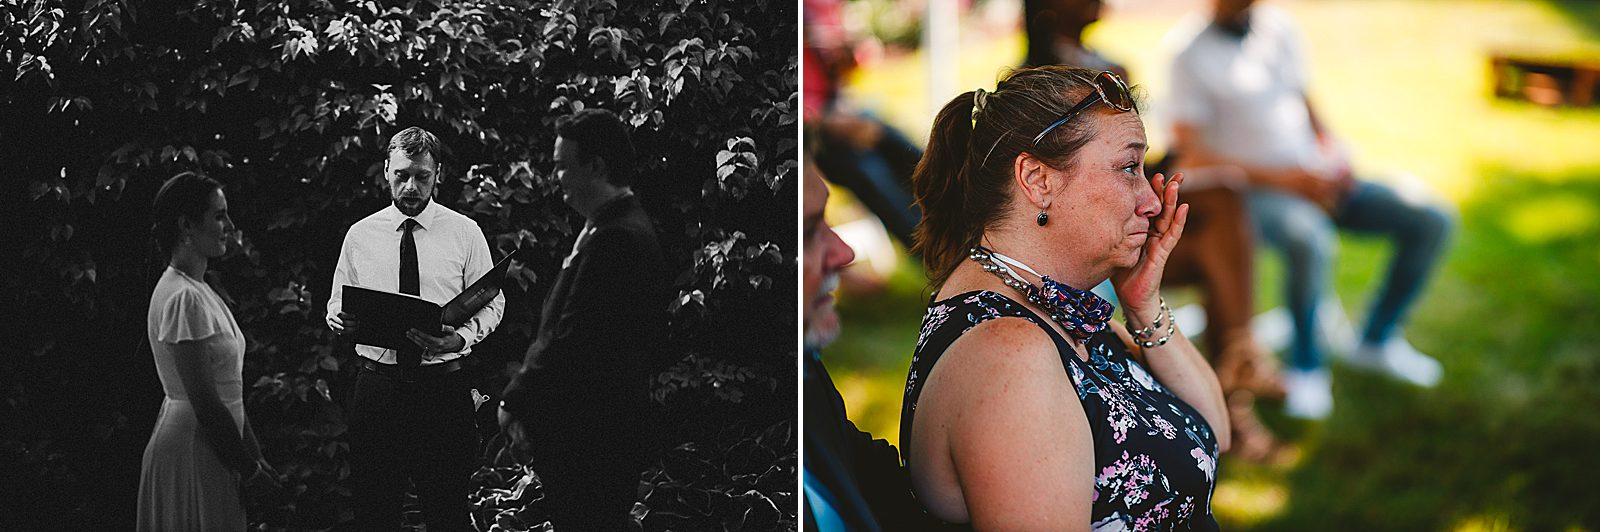 19 emotional wedding photos - Amazing Wedding in Backyard // Kristen + Jeff